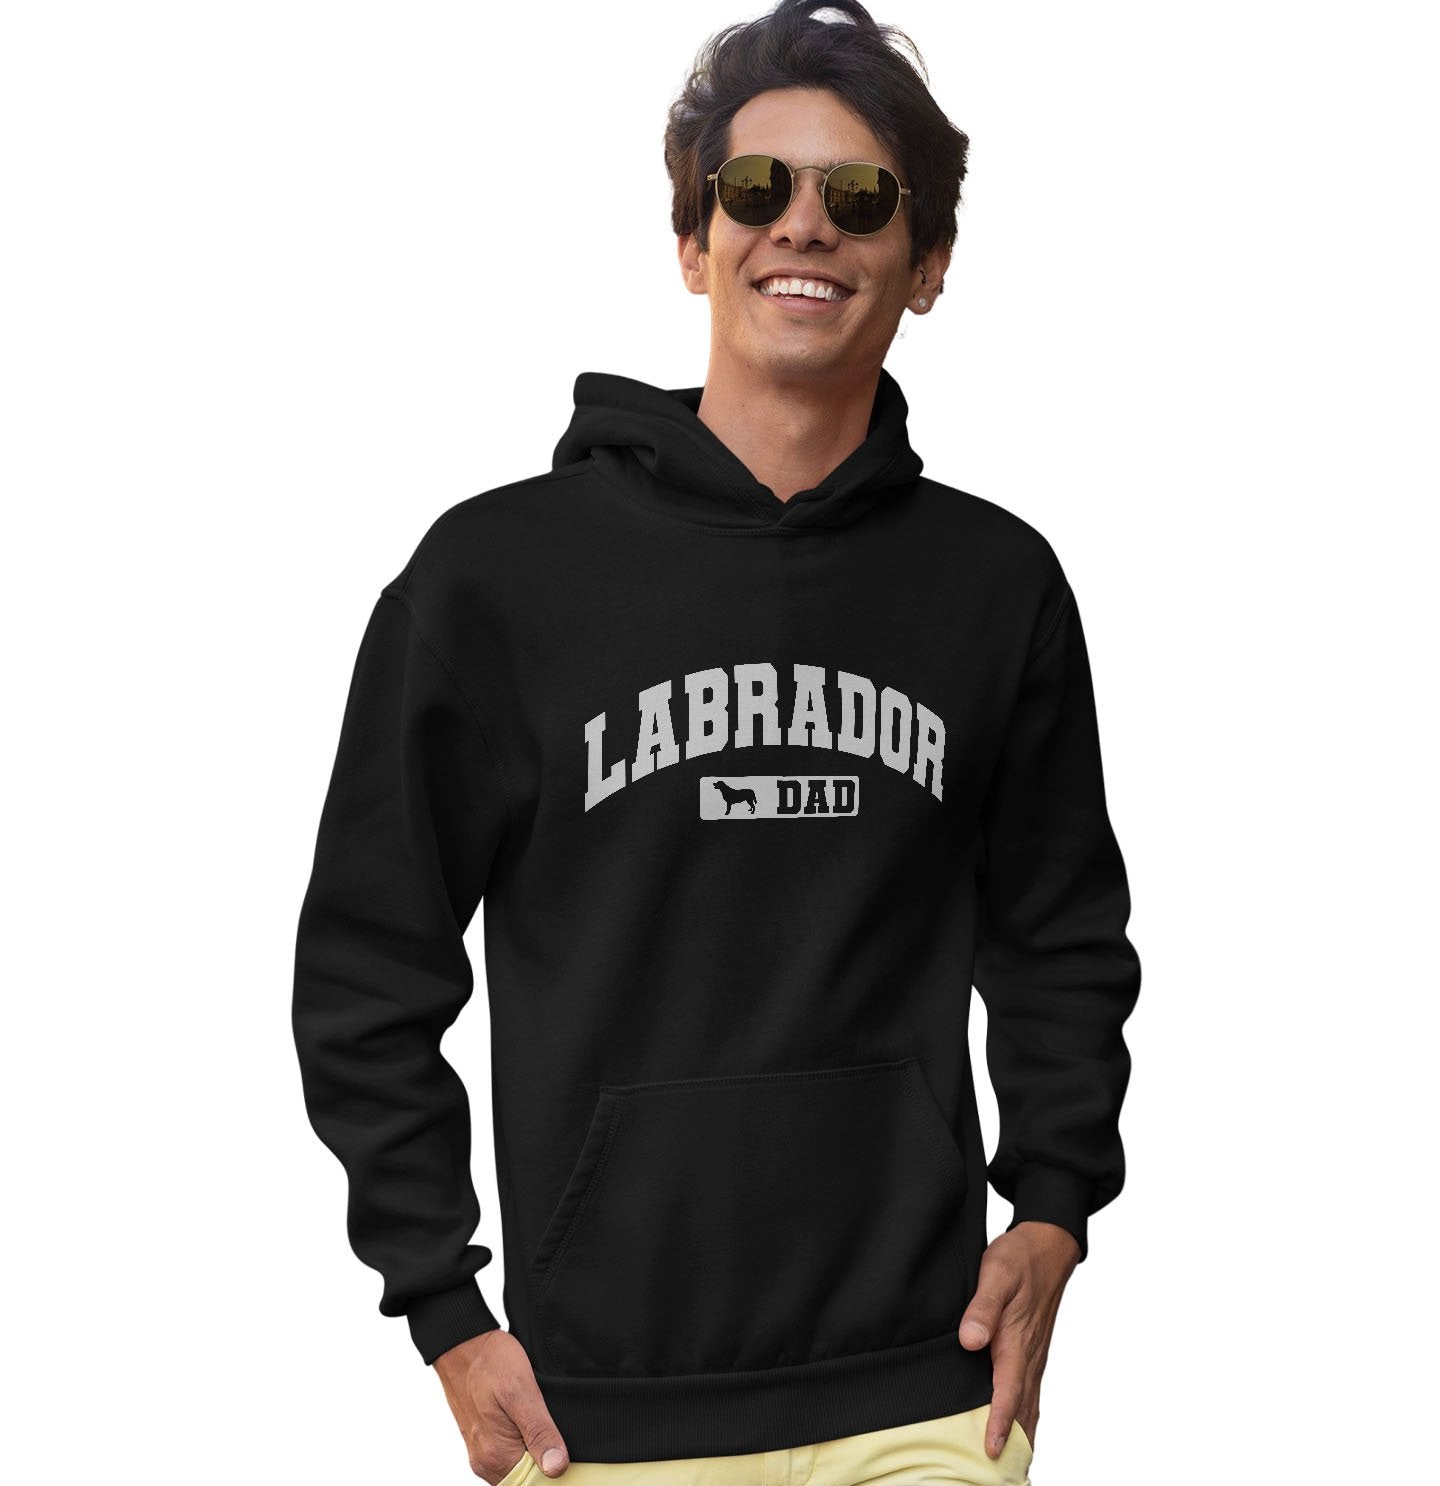 Labrador Dad - Sport Arch - Adult Unisex Hoodie Sweatshirt